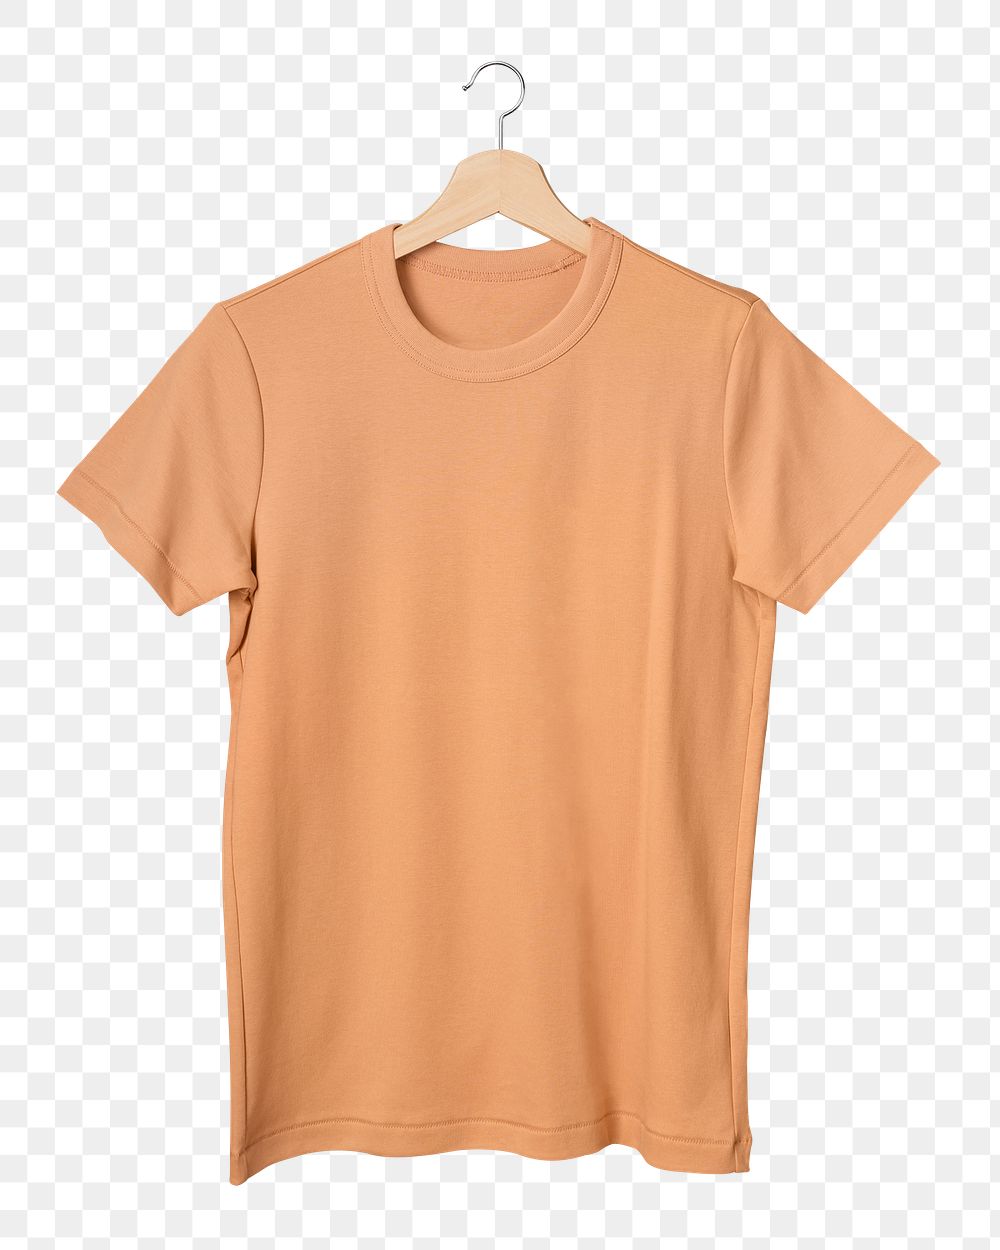 Orange t-shirt png, simple unisex fashion, transparent design transparent background 